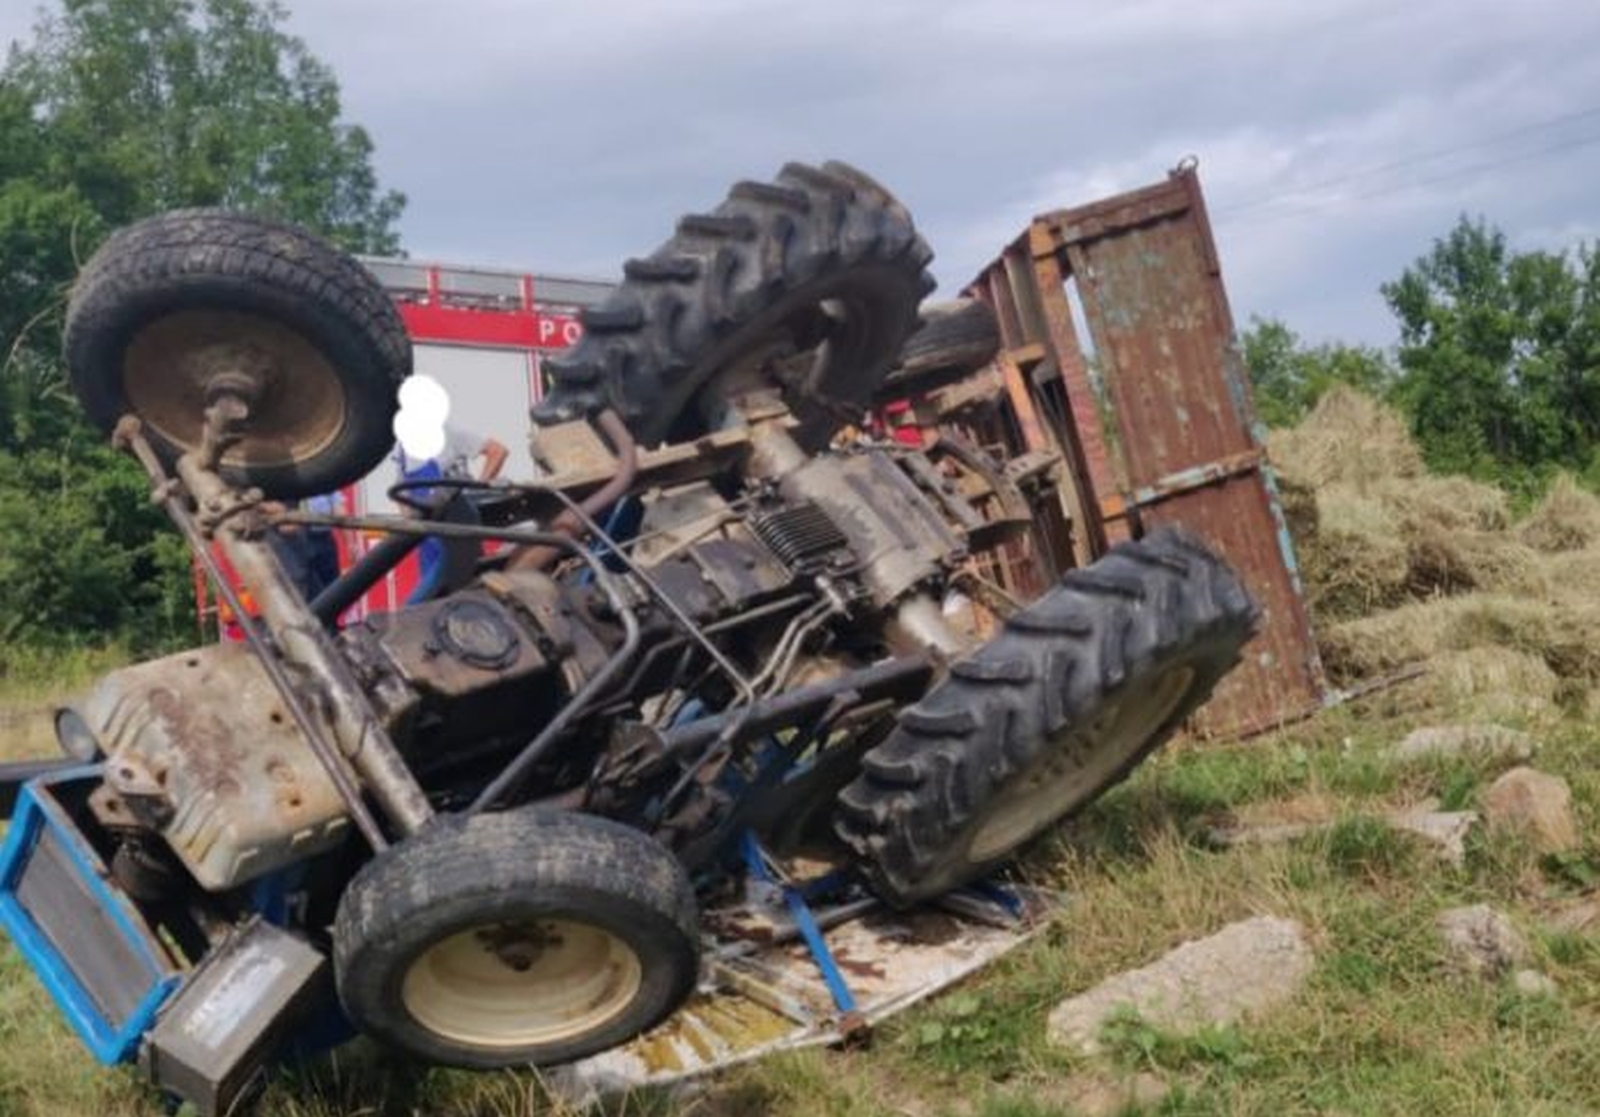 Bărbat prins sub tractor la Cepari